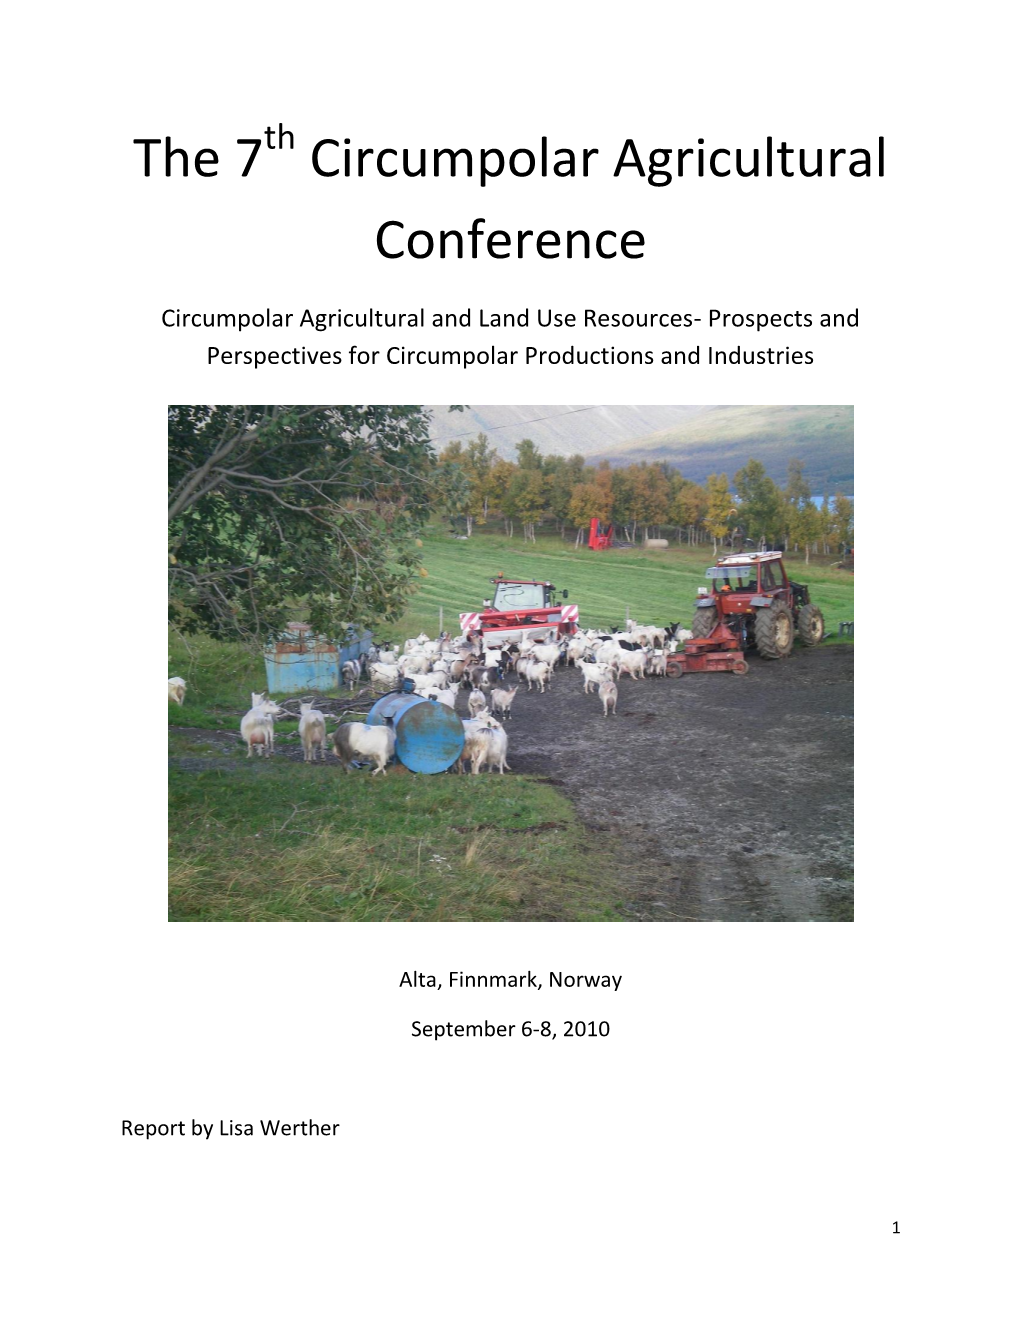 The 7 Circumpolar Agricultural Conference